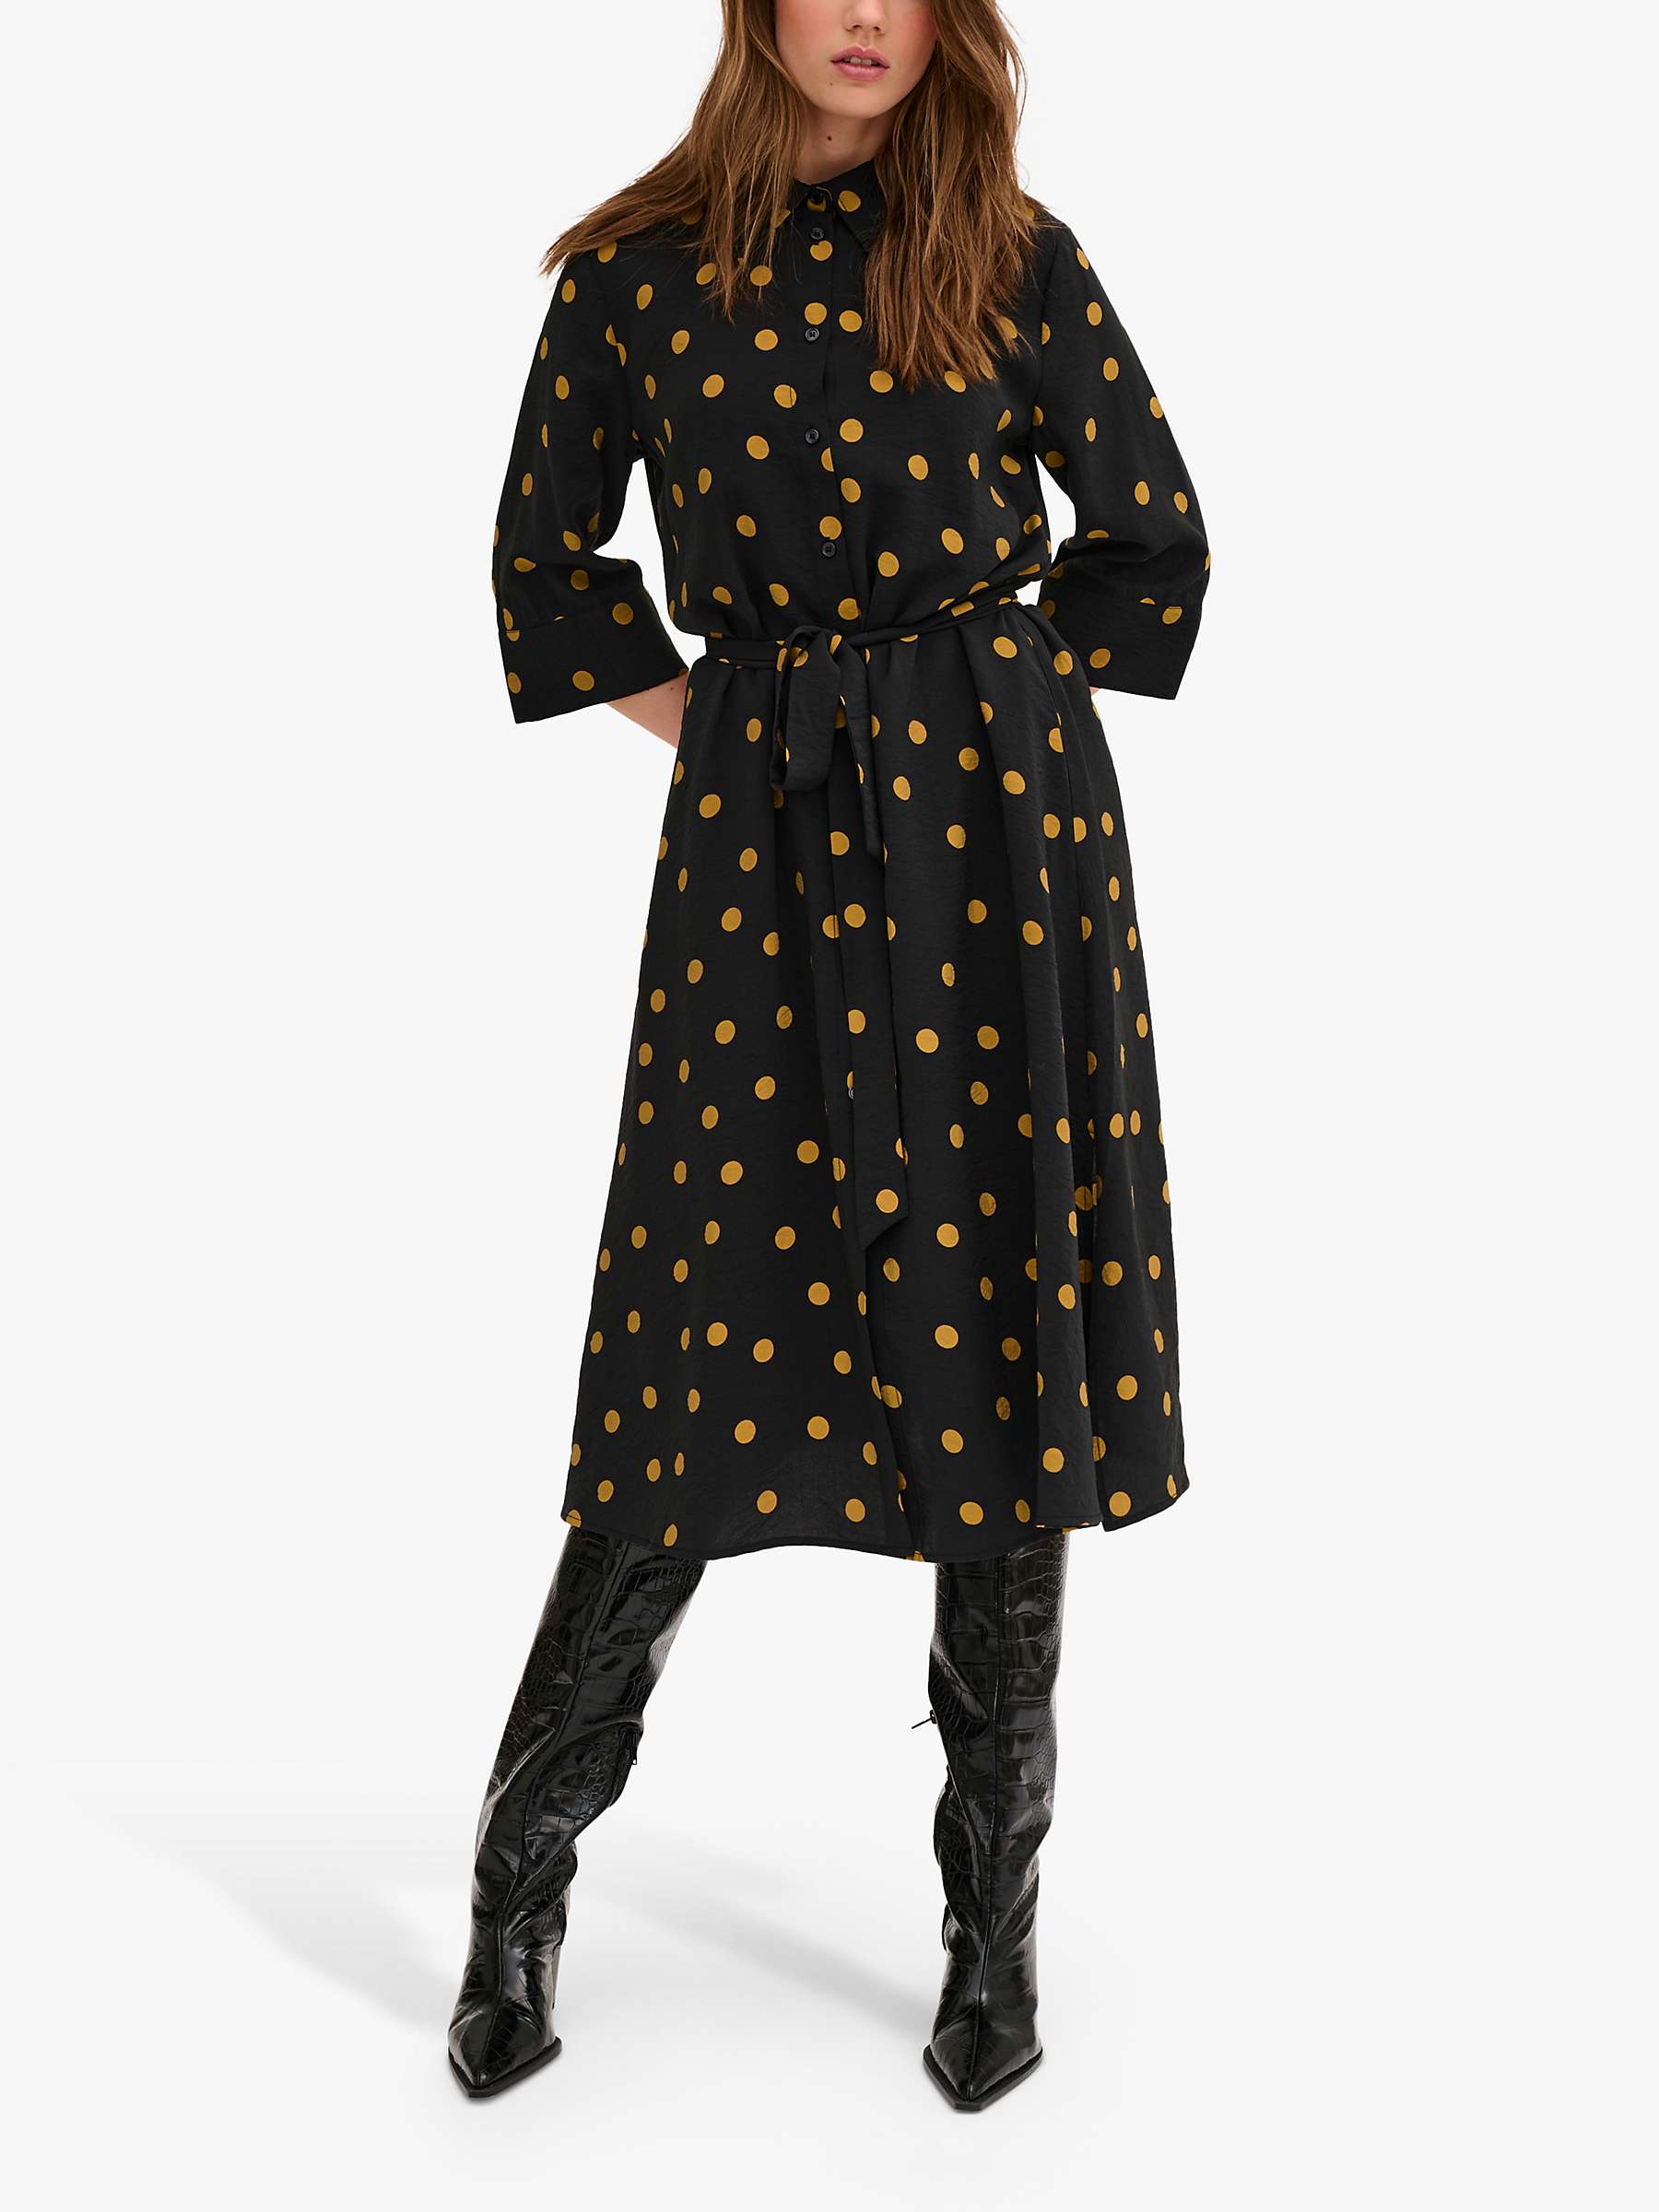 Buy MY ESSENTIAL WARDROBE Maria Costa Spot Dress, Black Online at johnlewis.com